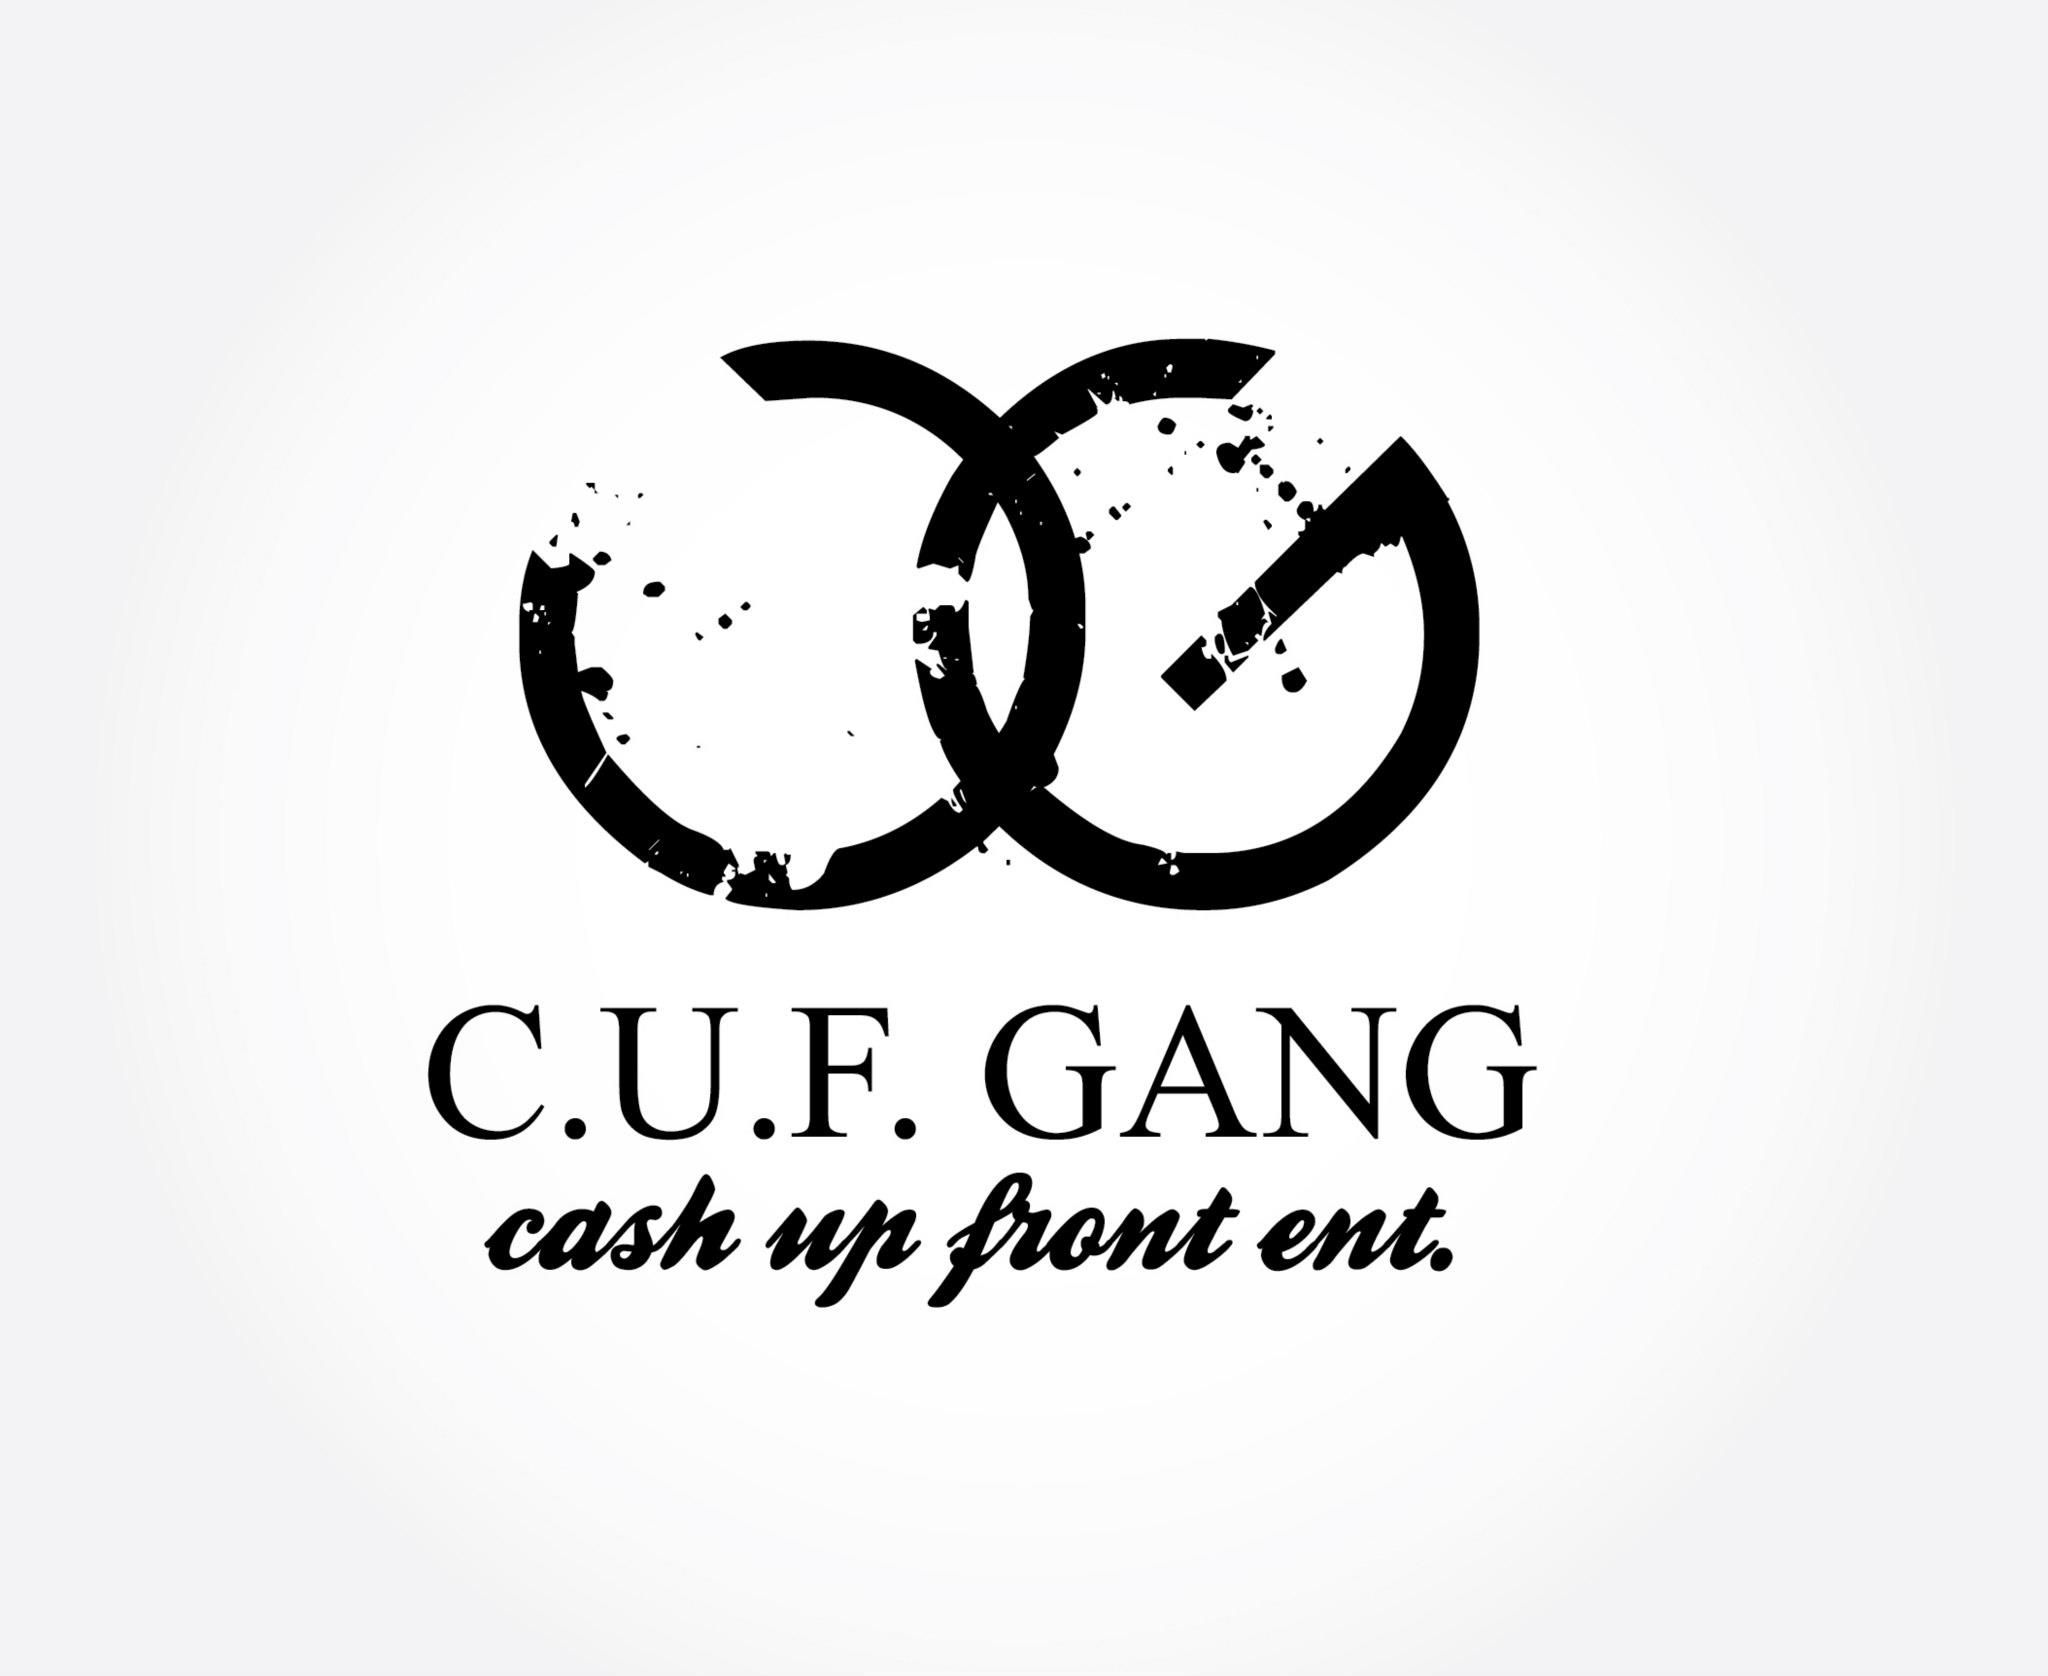 gang logo ideas 3